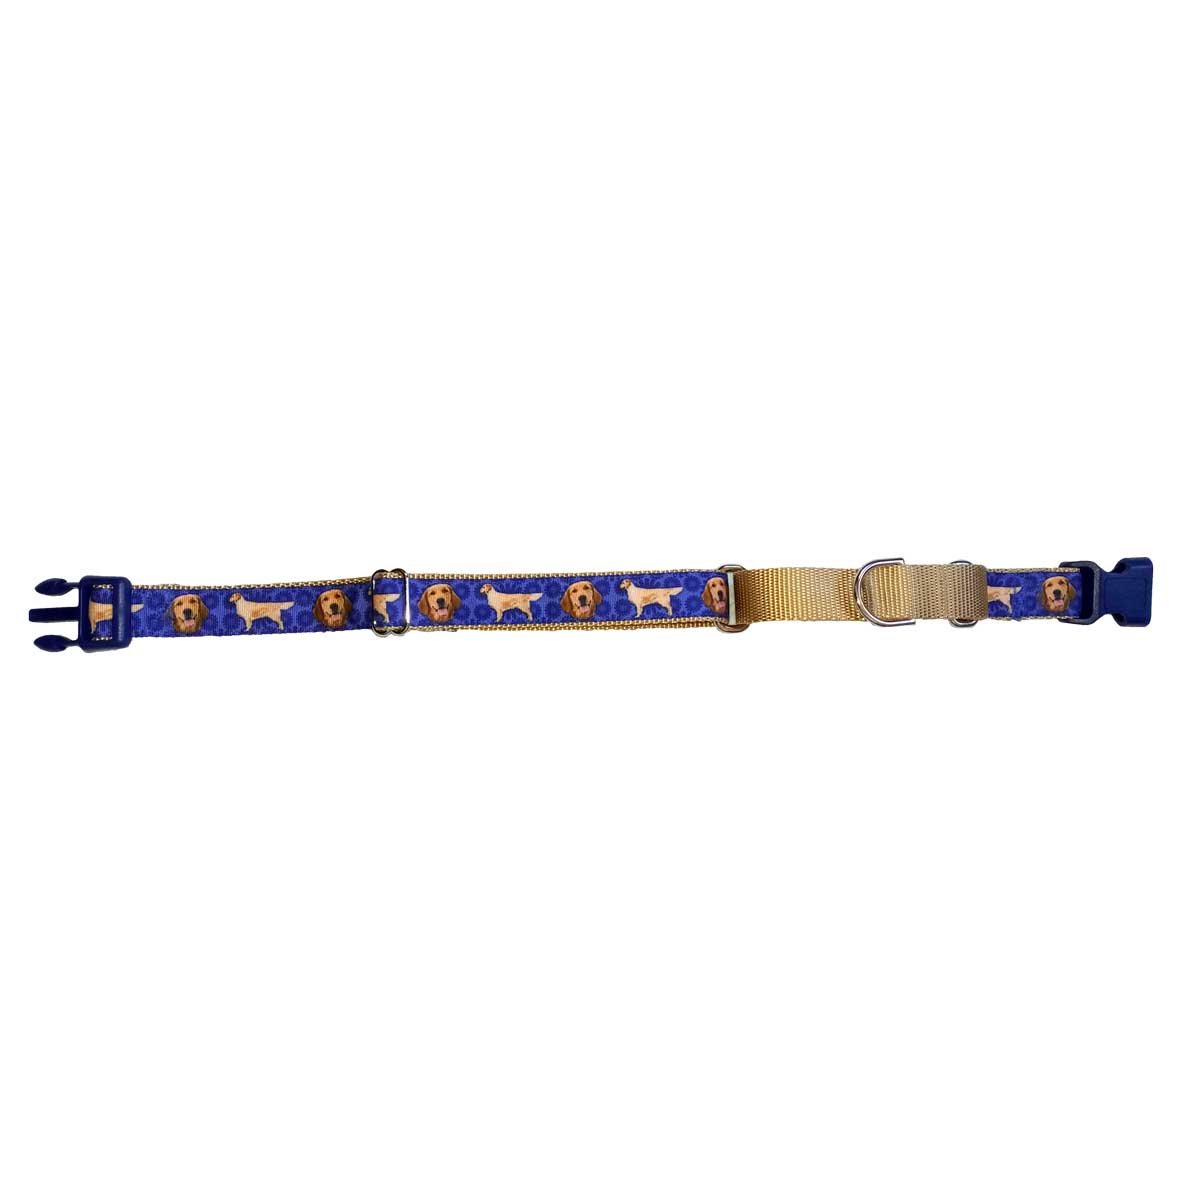 Golden Retriever Leash - 6 ft. long - Blue